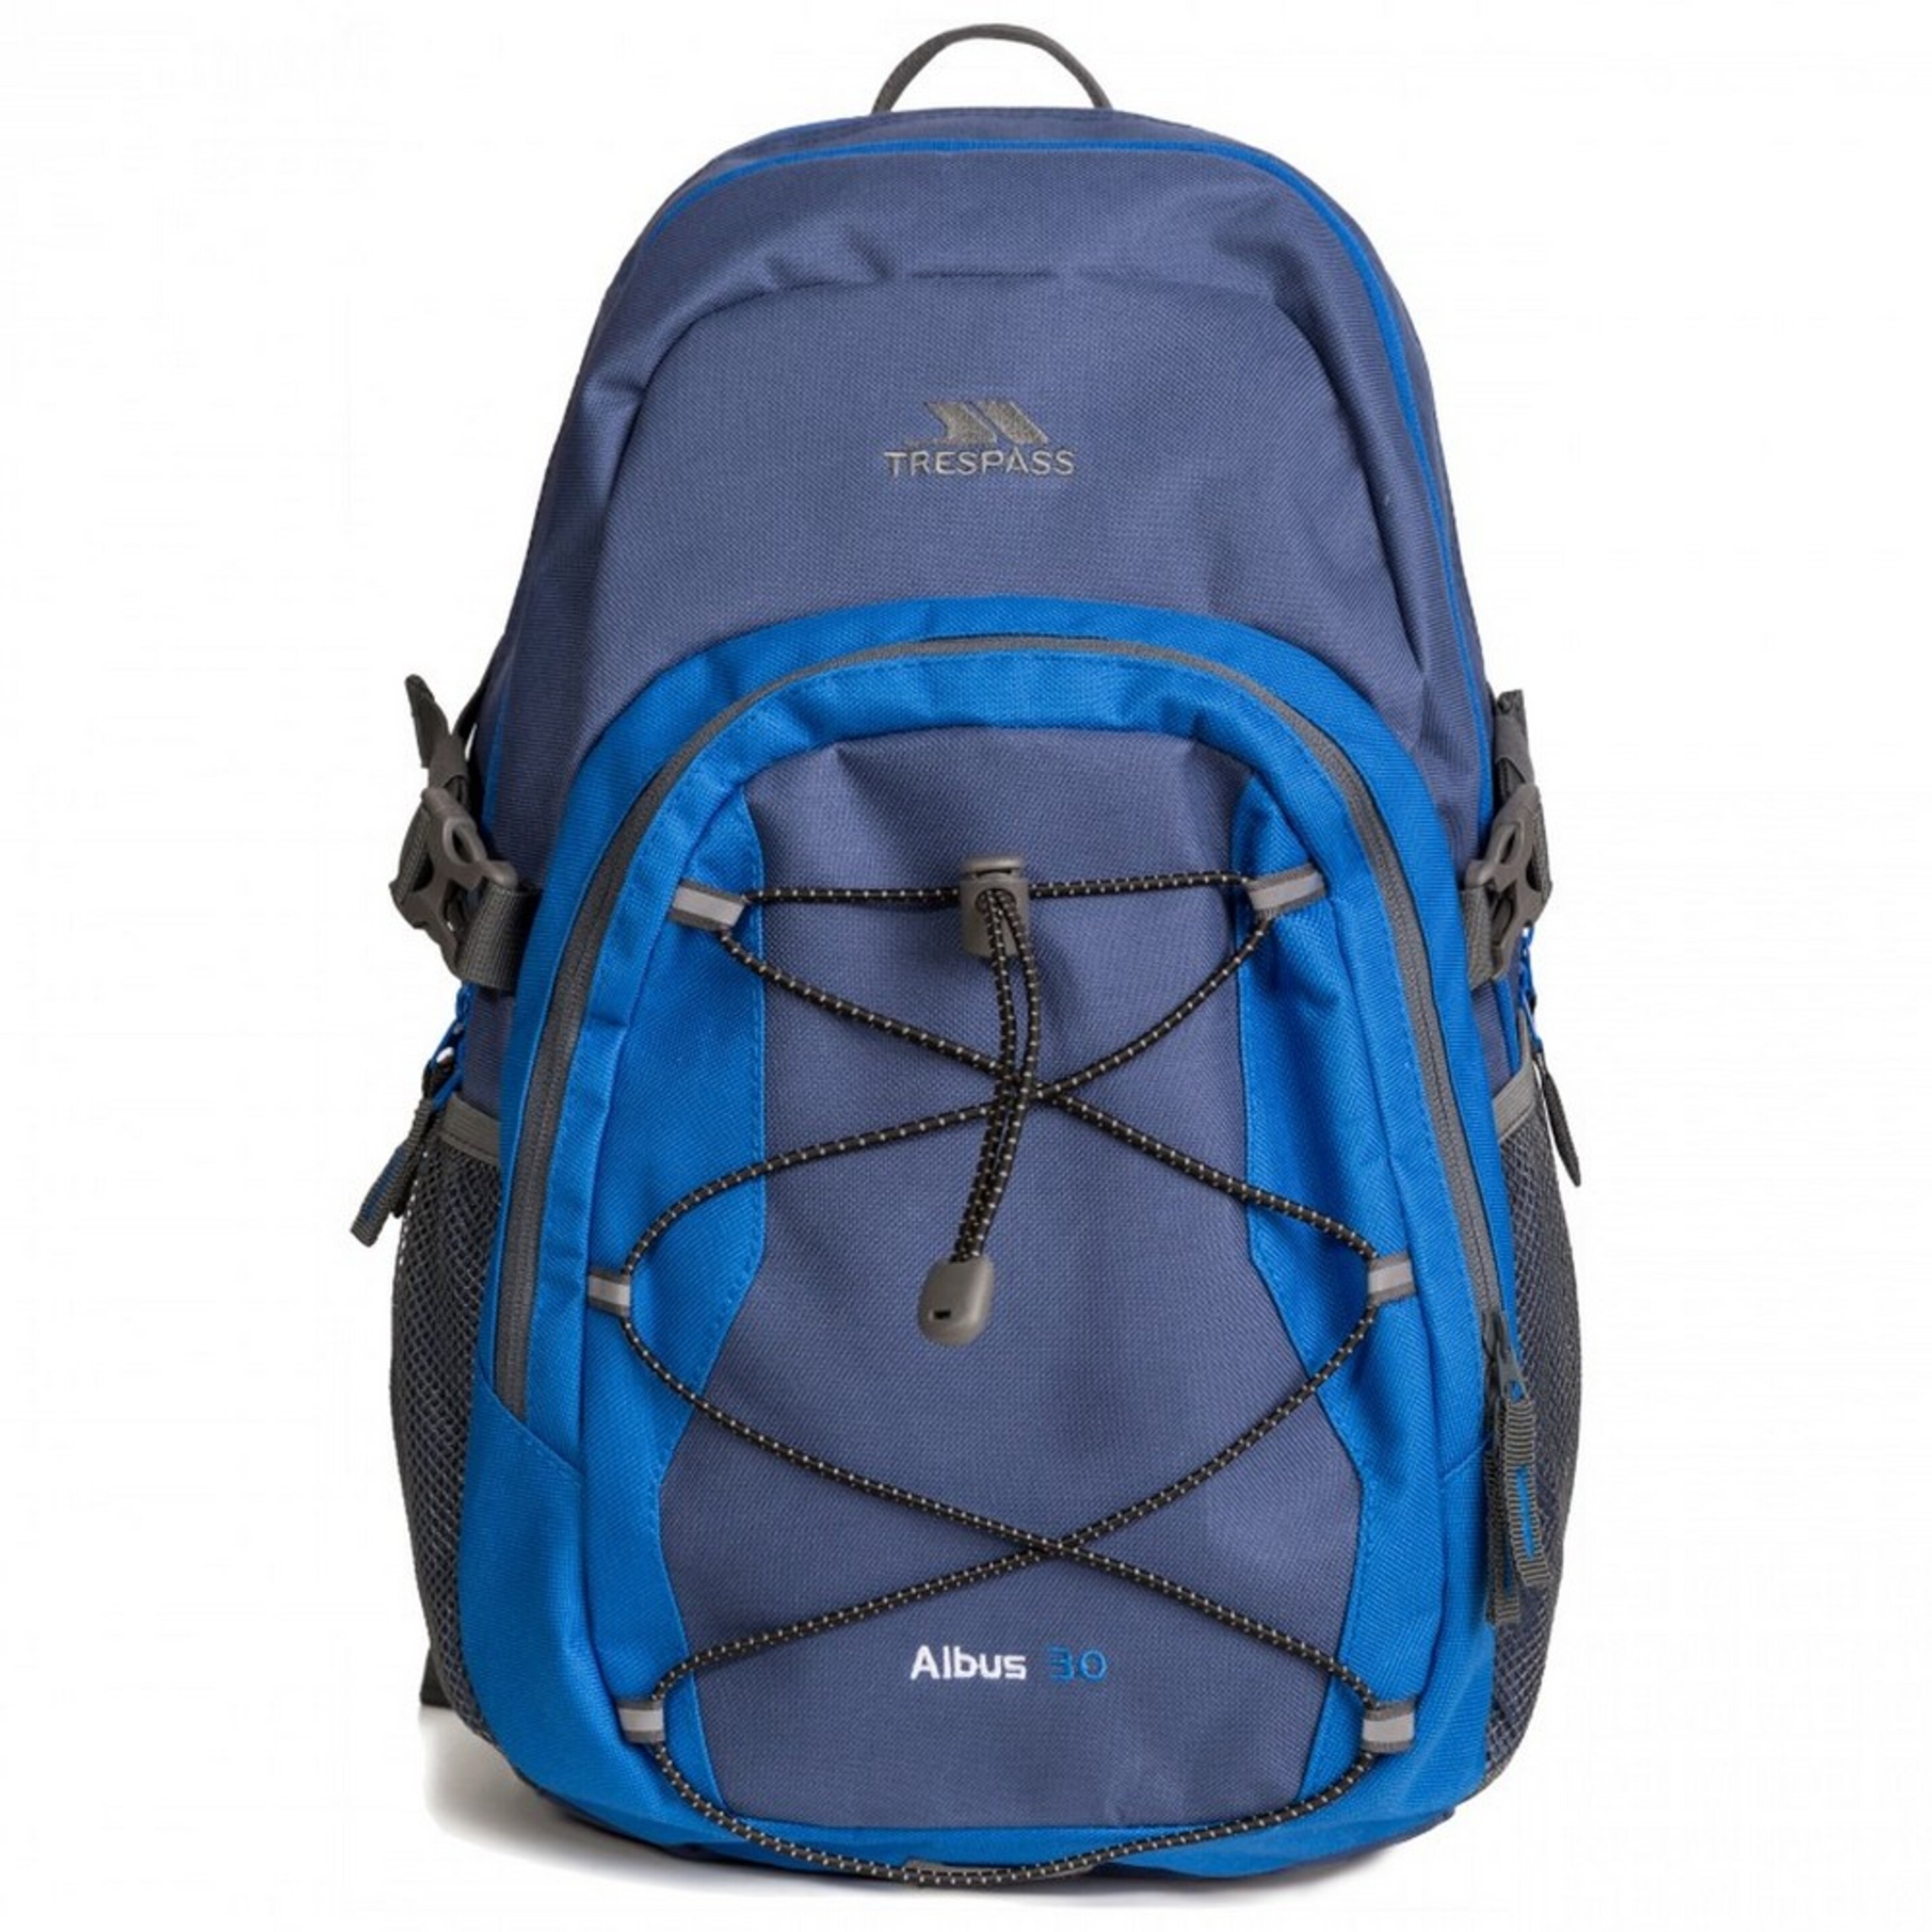 Trespass Albus 30 Litre Casual Rucksack/backpack (Azul)